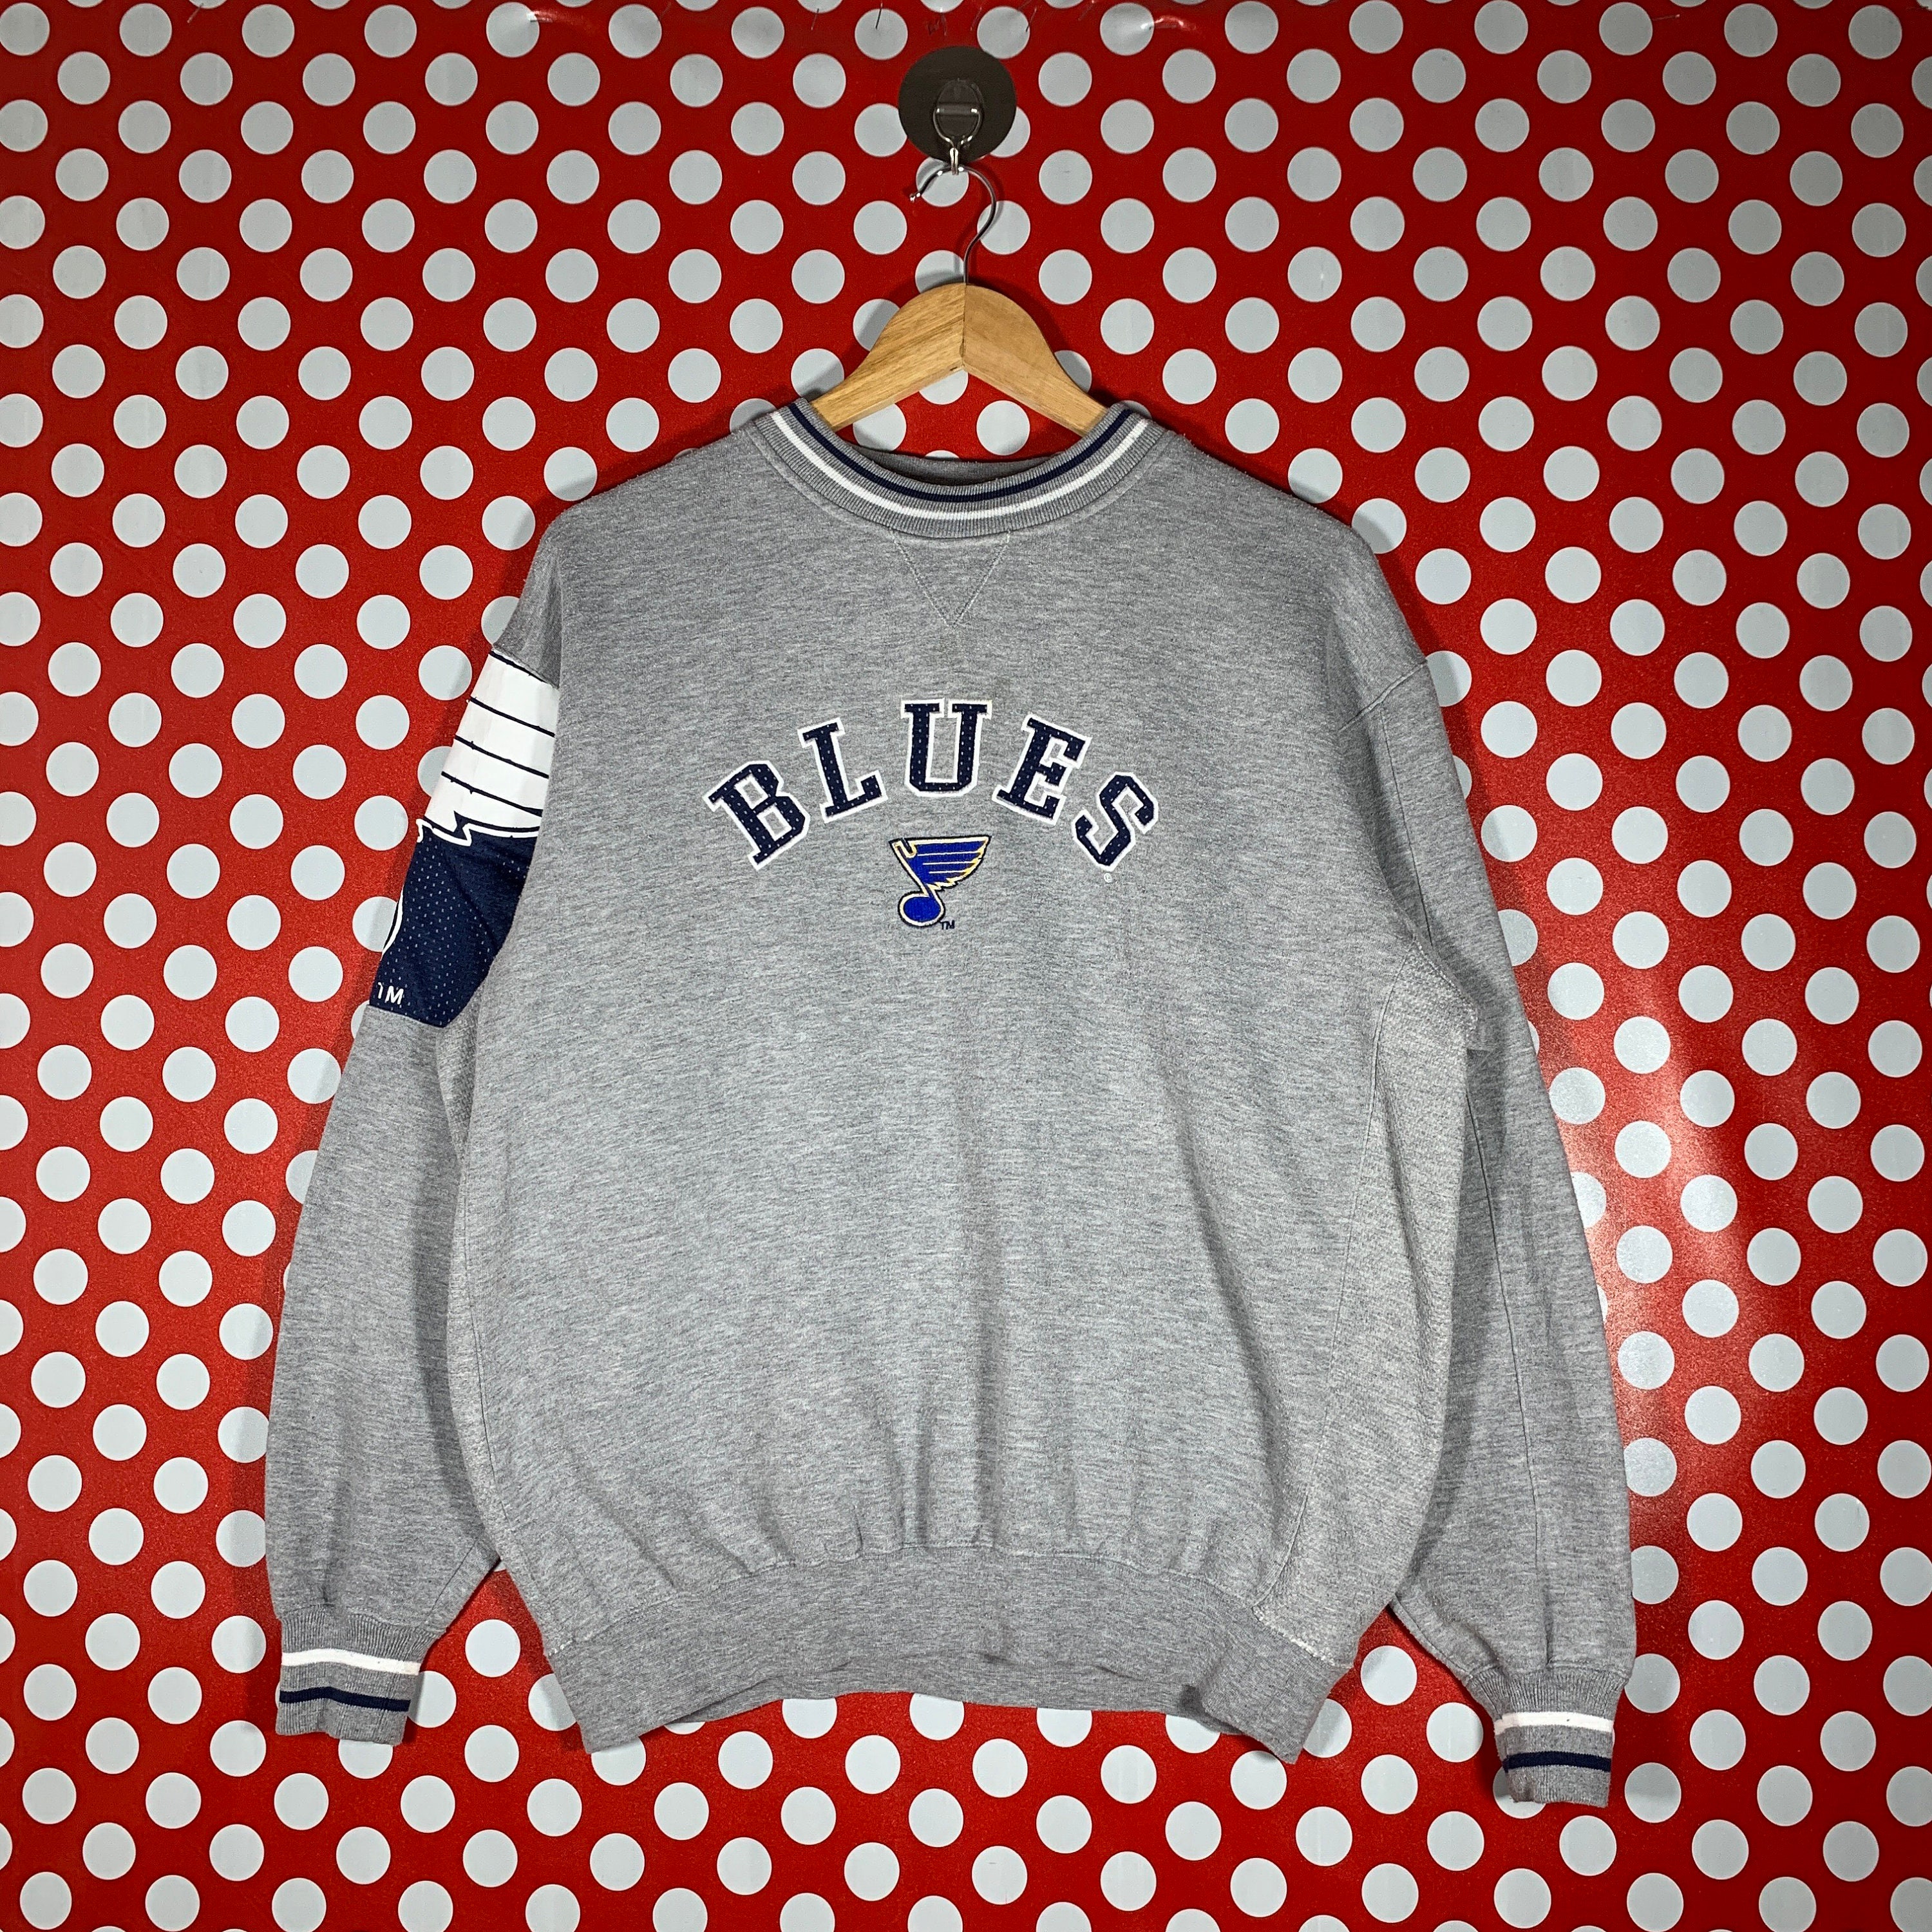 Vintage 90s Saint Louis Blues Hockey Print Crewneck Sweatshirt